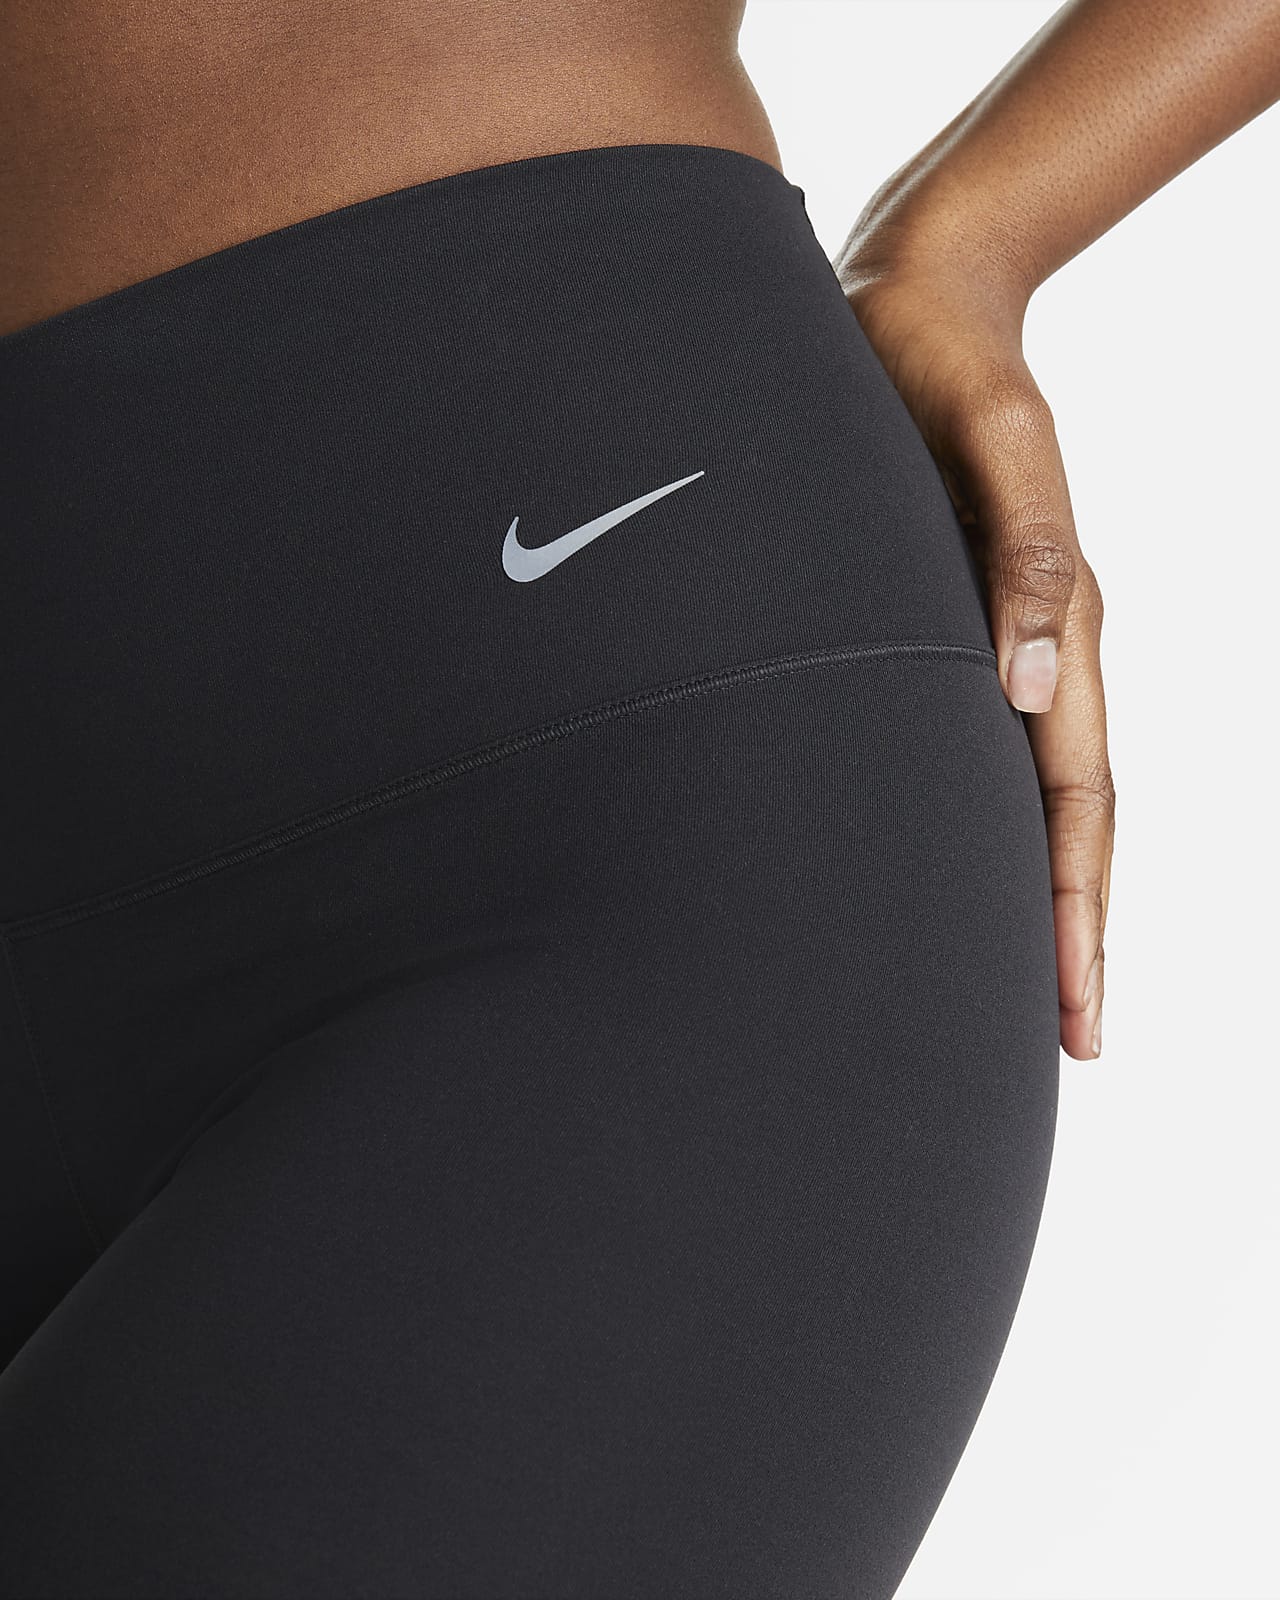 Nike Dri Fit Just Do It Black Cropped Running Leggings Woman's Size XS -  beyond exchange